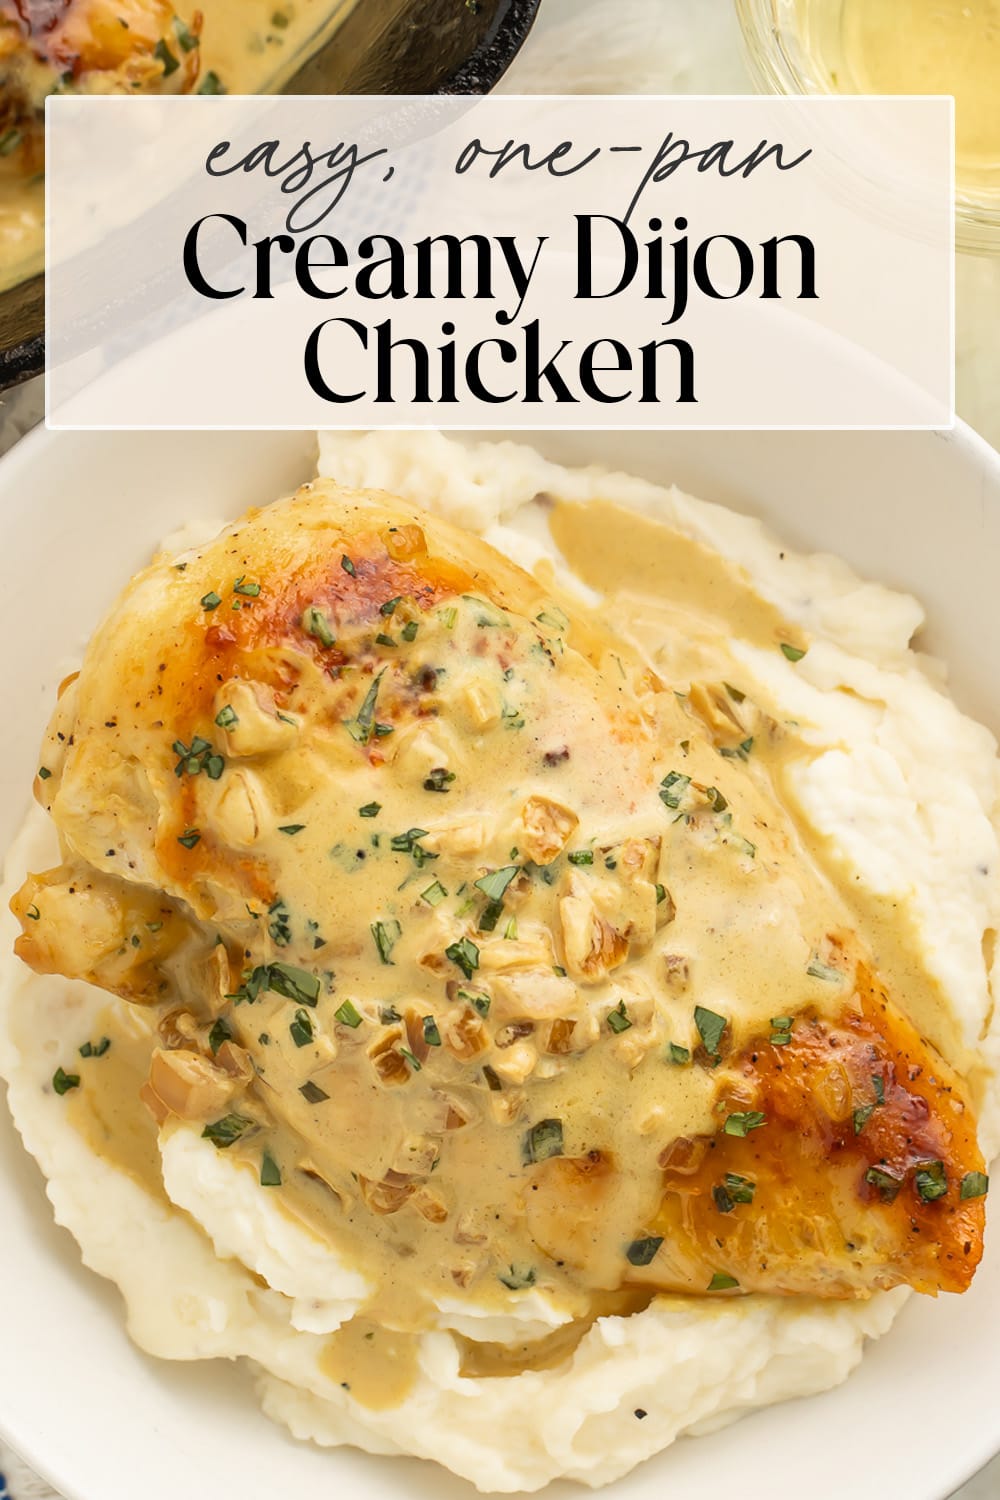 Pin graphic for creamy Dijon chicken.